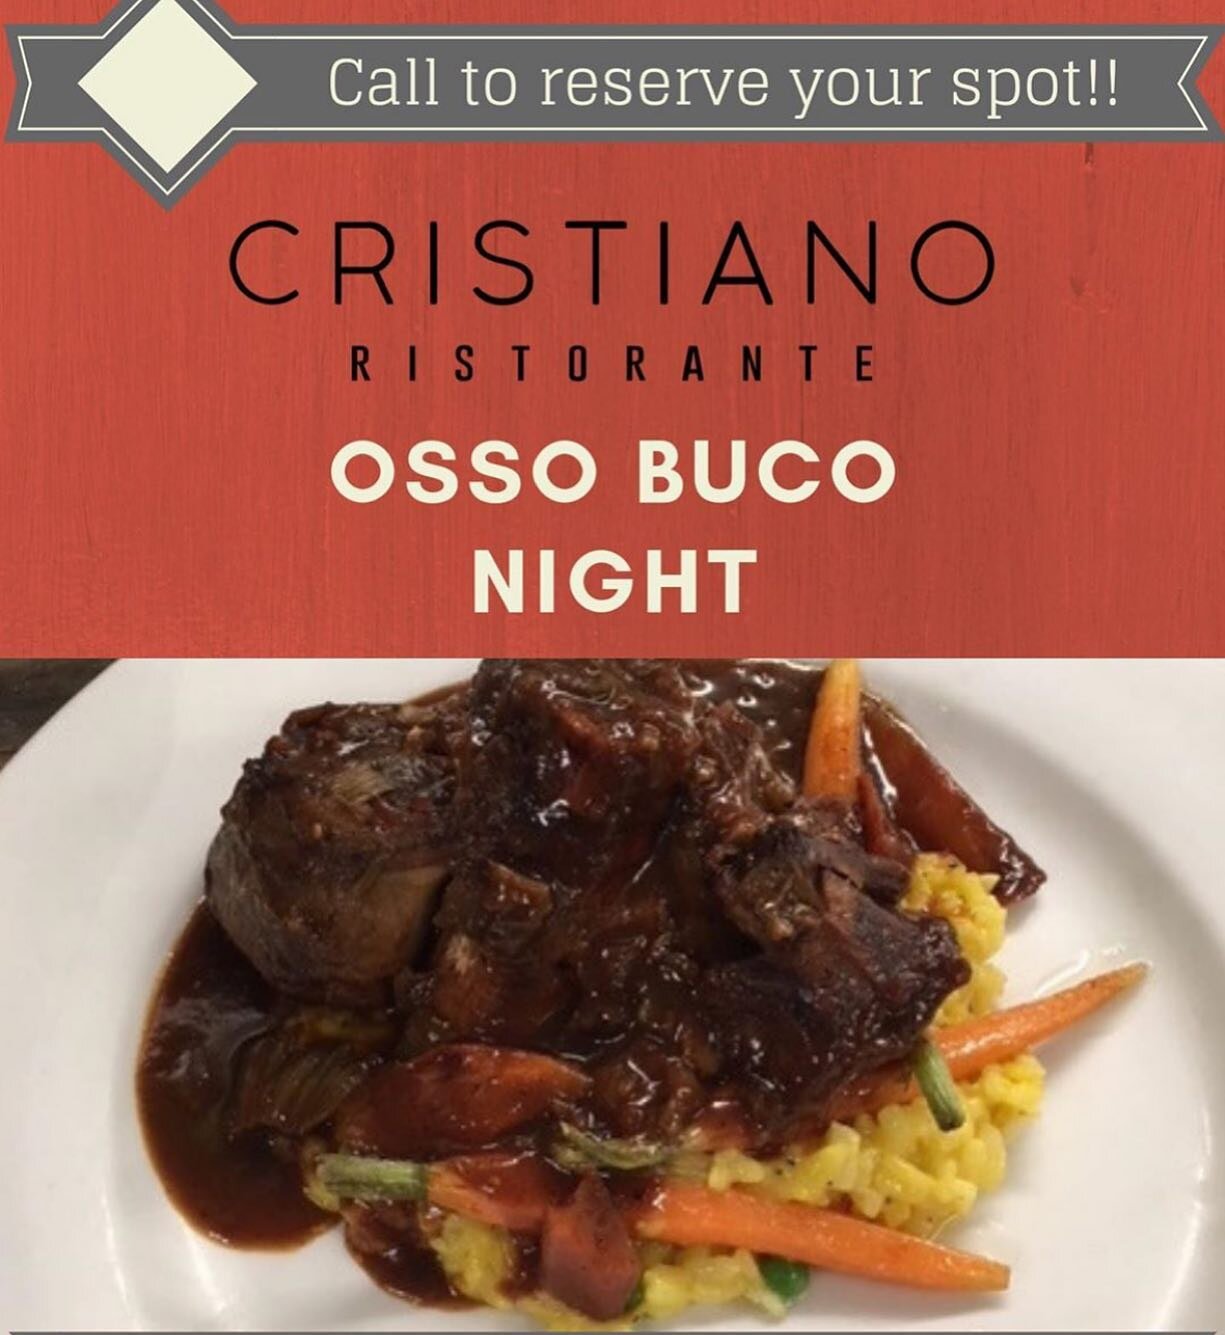 Tonight is Osso Buco night. Call for your reservation. #ossobuco #cristianoristorante #finedining #houma #louisiana